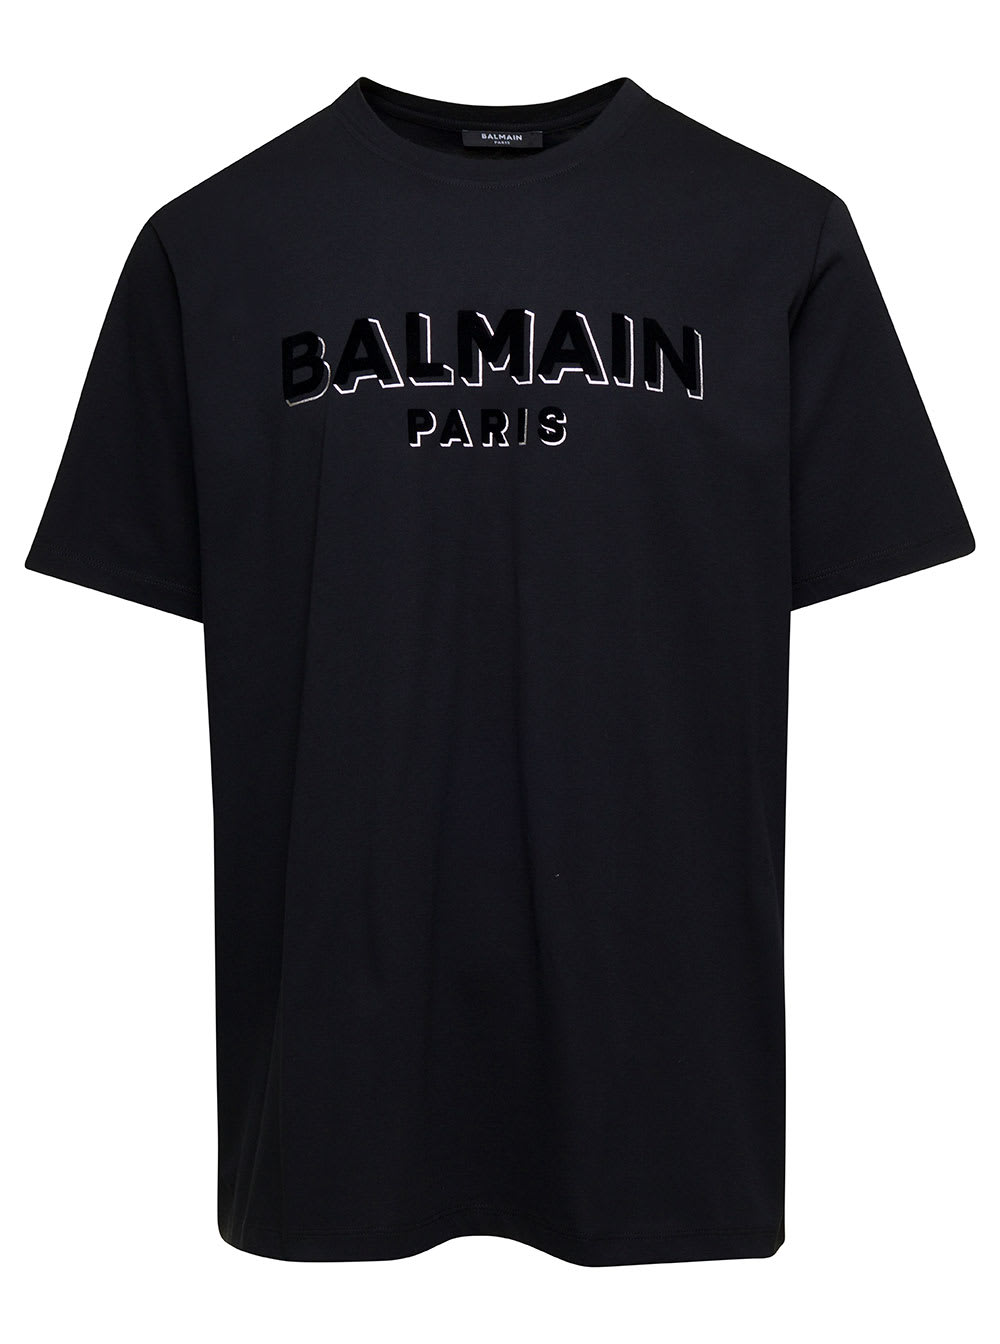 BALMAIN BALMAIN FLOCK & FOIL T-SHIRT - BULKY FIT